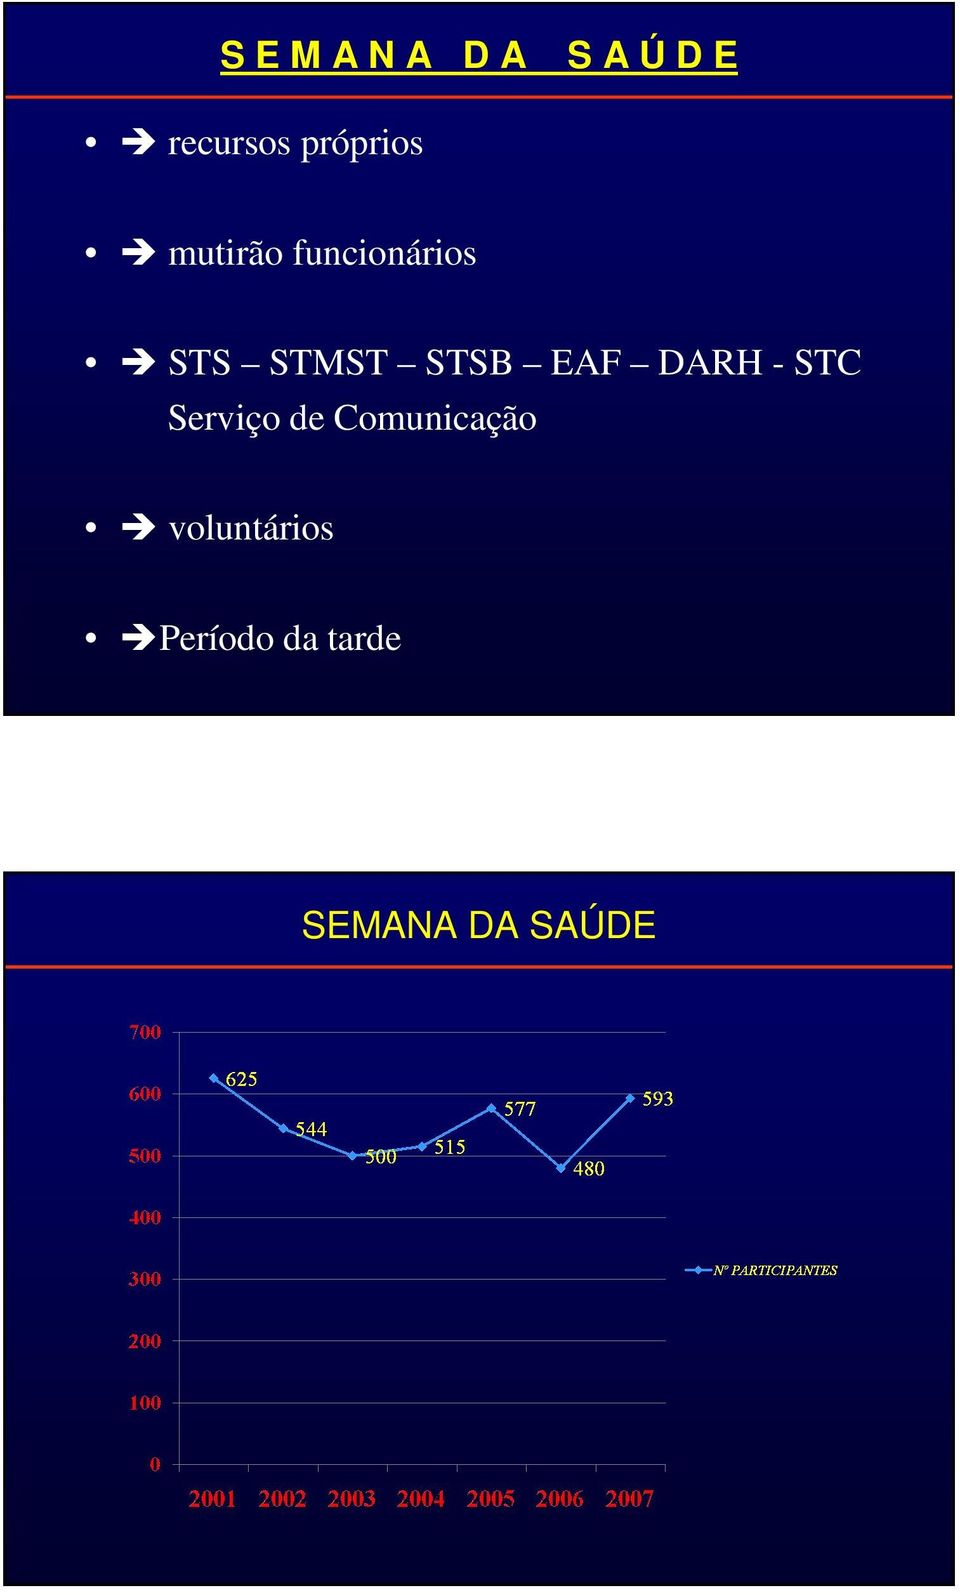 STSB EAF DARH - STC Serviço de